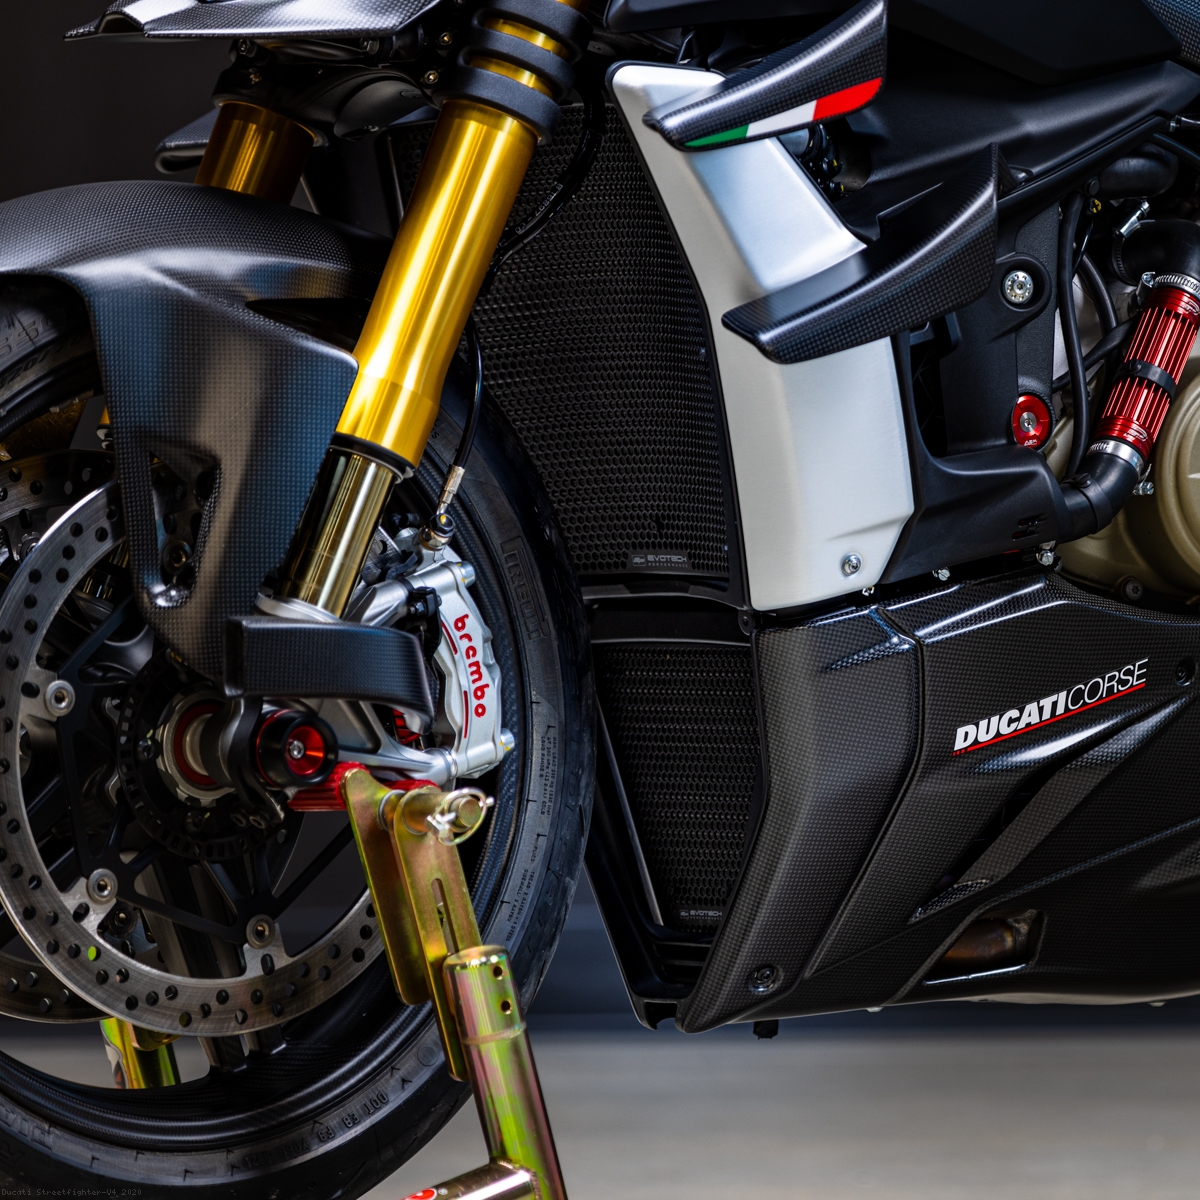 Evotech Performance Radiator & Oil Guard Kit to fit all Ducati